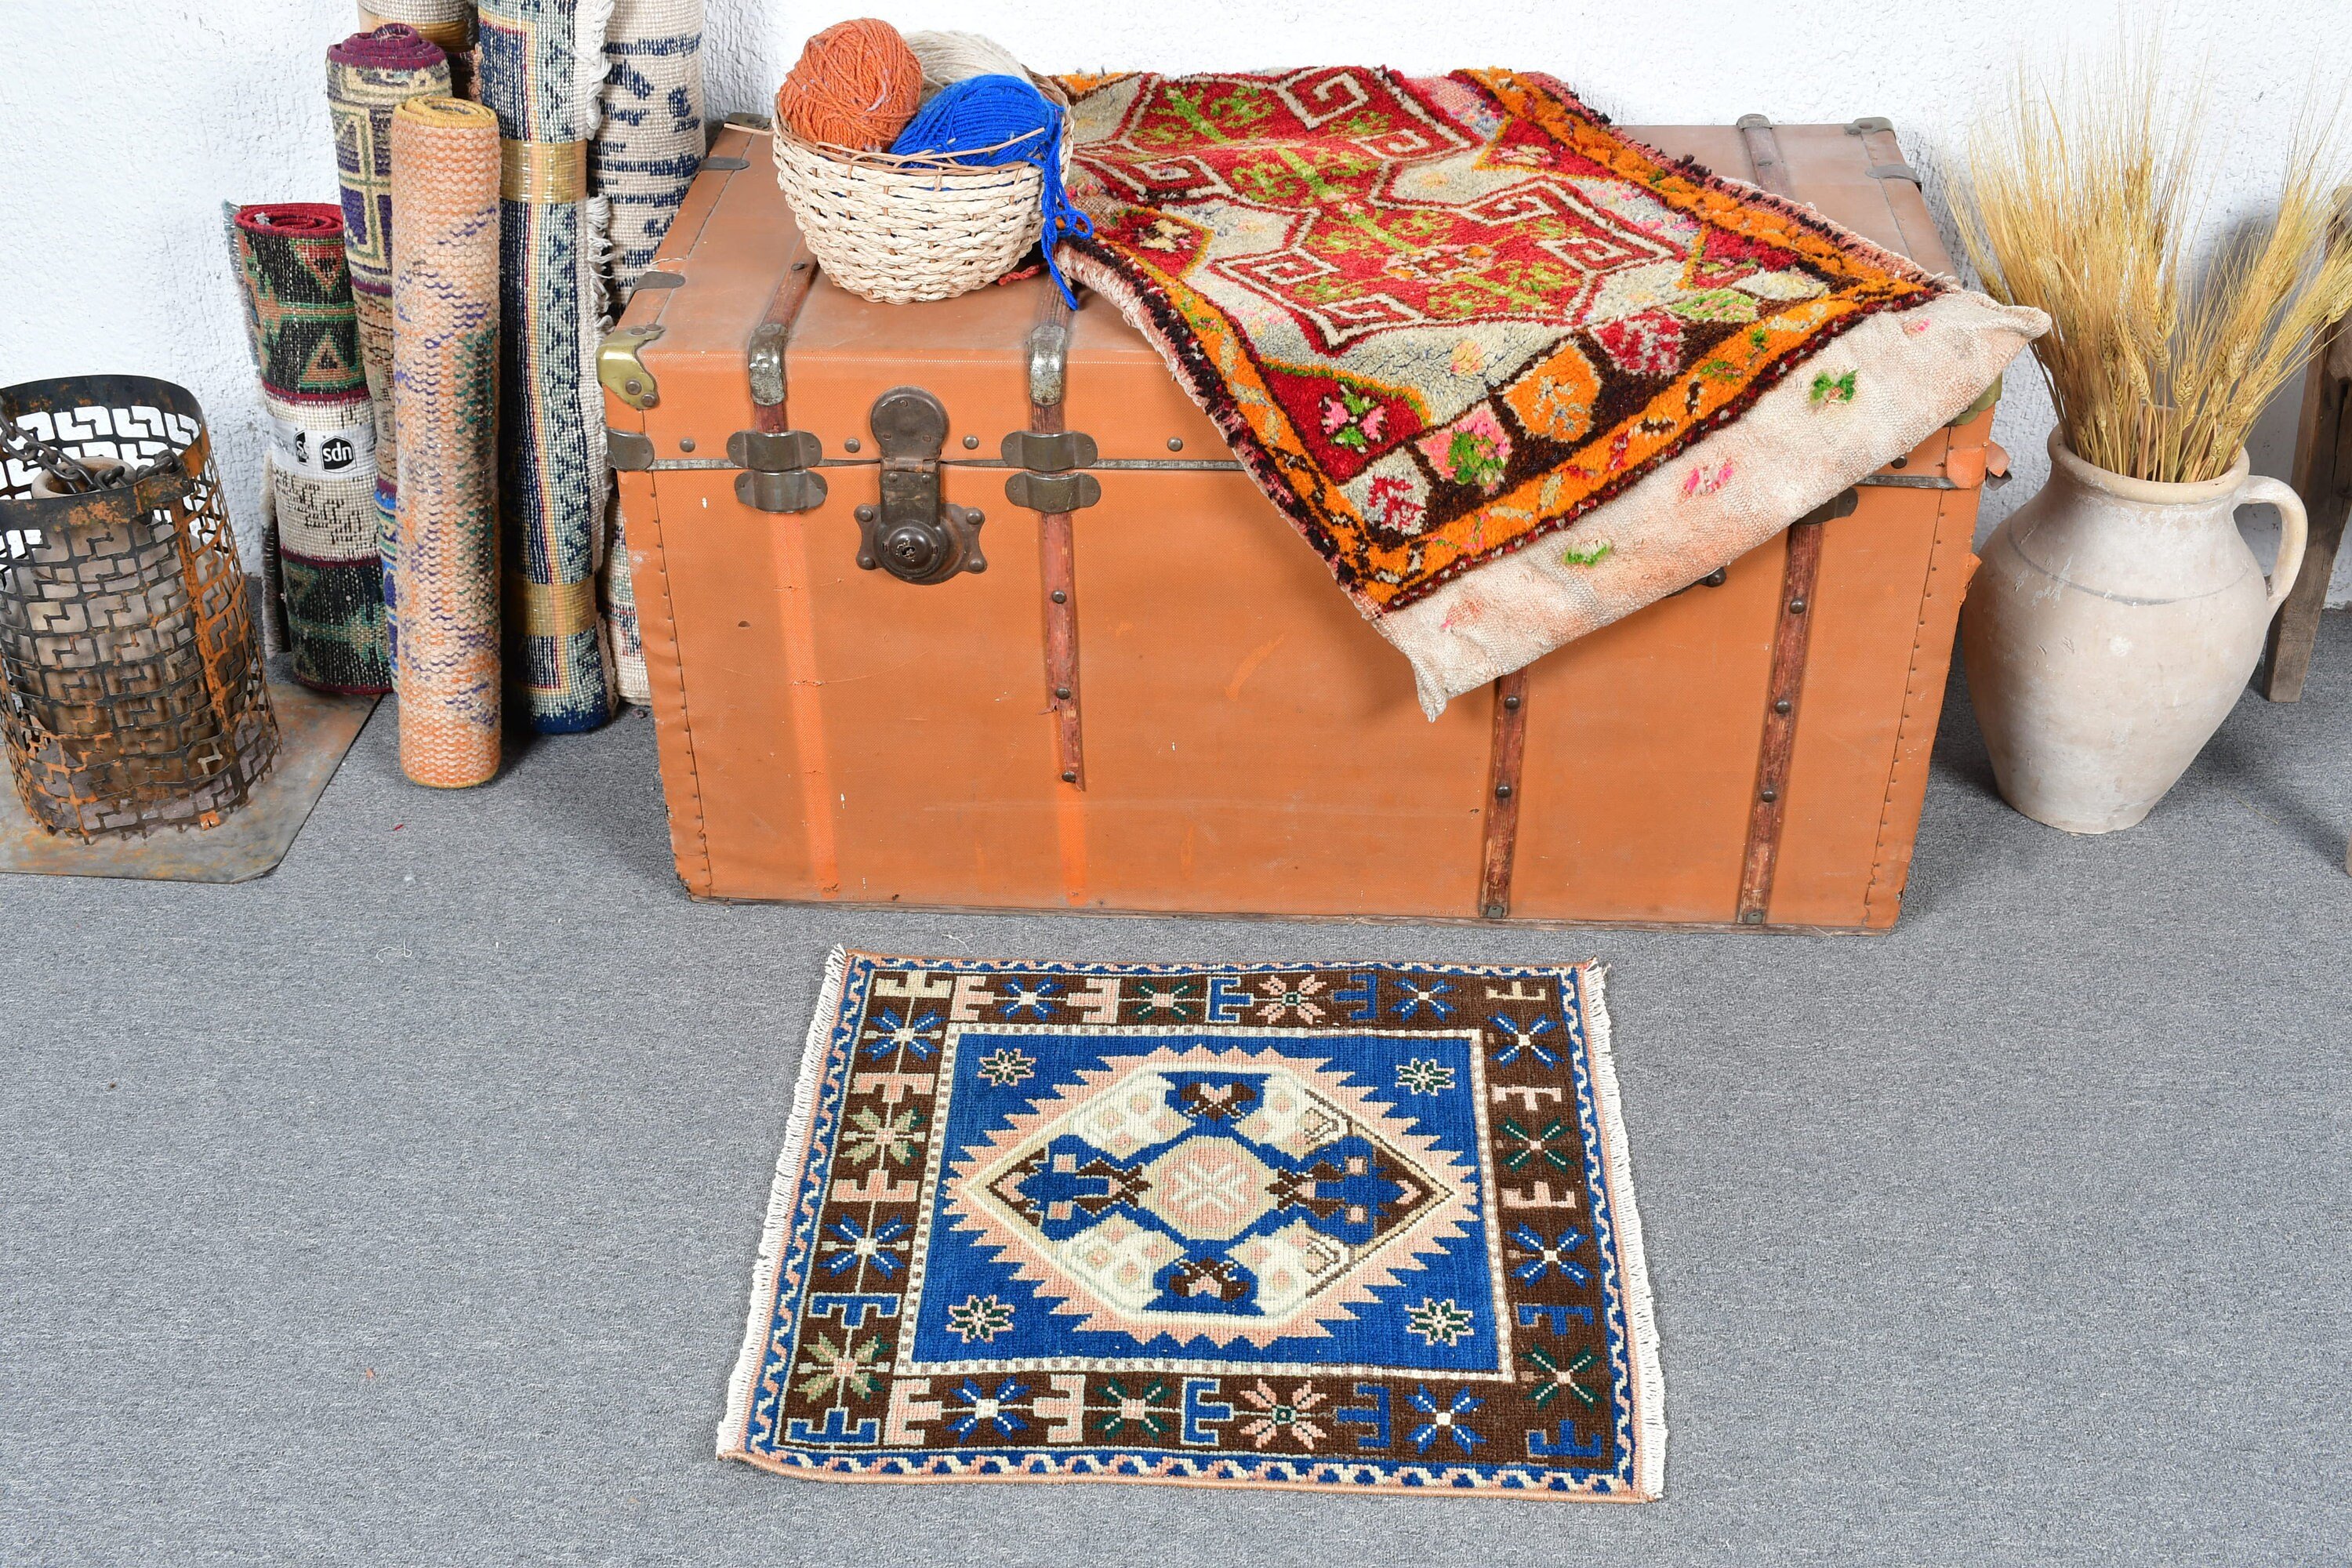 Anatolian Rug, Eclectic Rugs, Brown Cool Rug, Home Decor Rug, 1.9x1.7 ft Small Rug, Bathroom Rug, Car Mat Rugs, Vintage Rug, Turkish Rugs